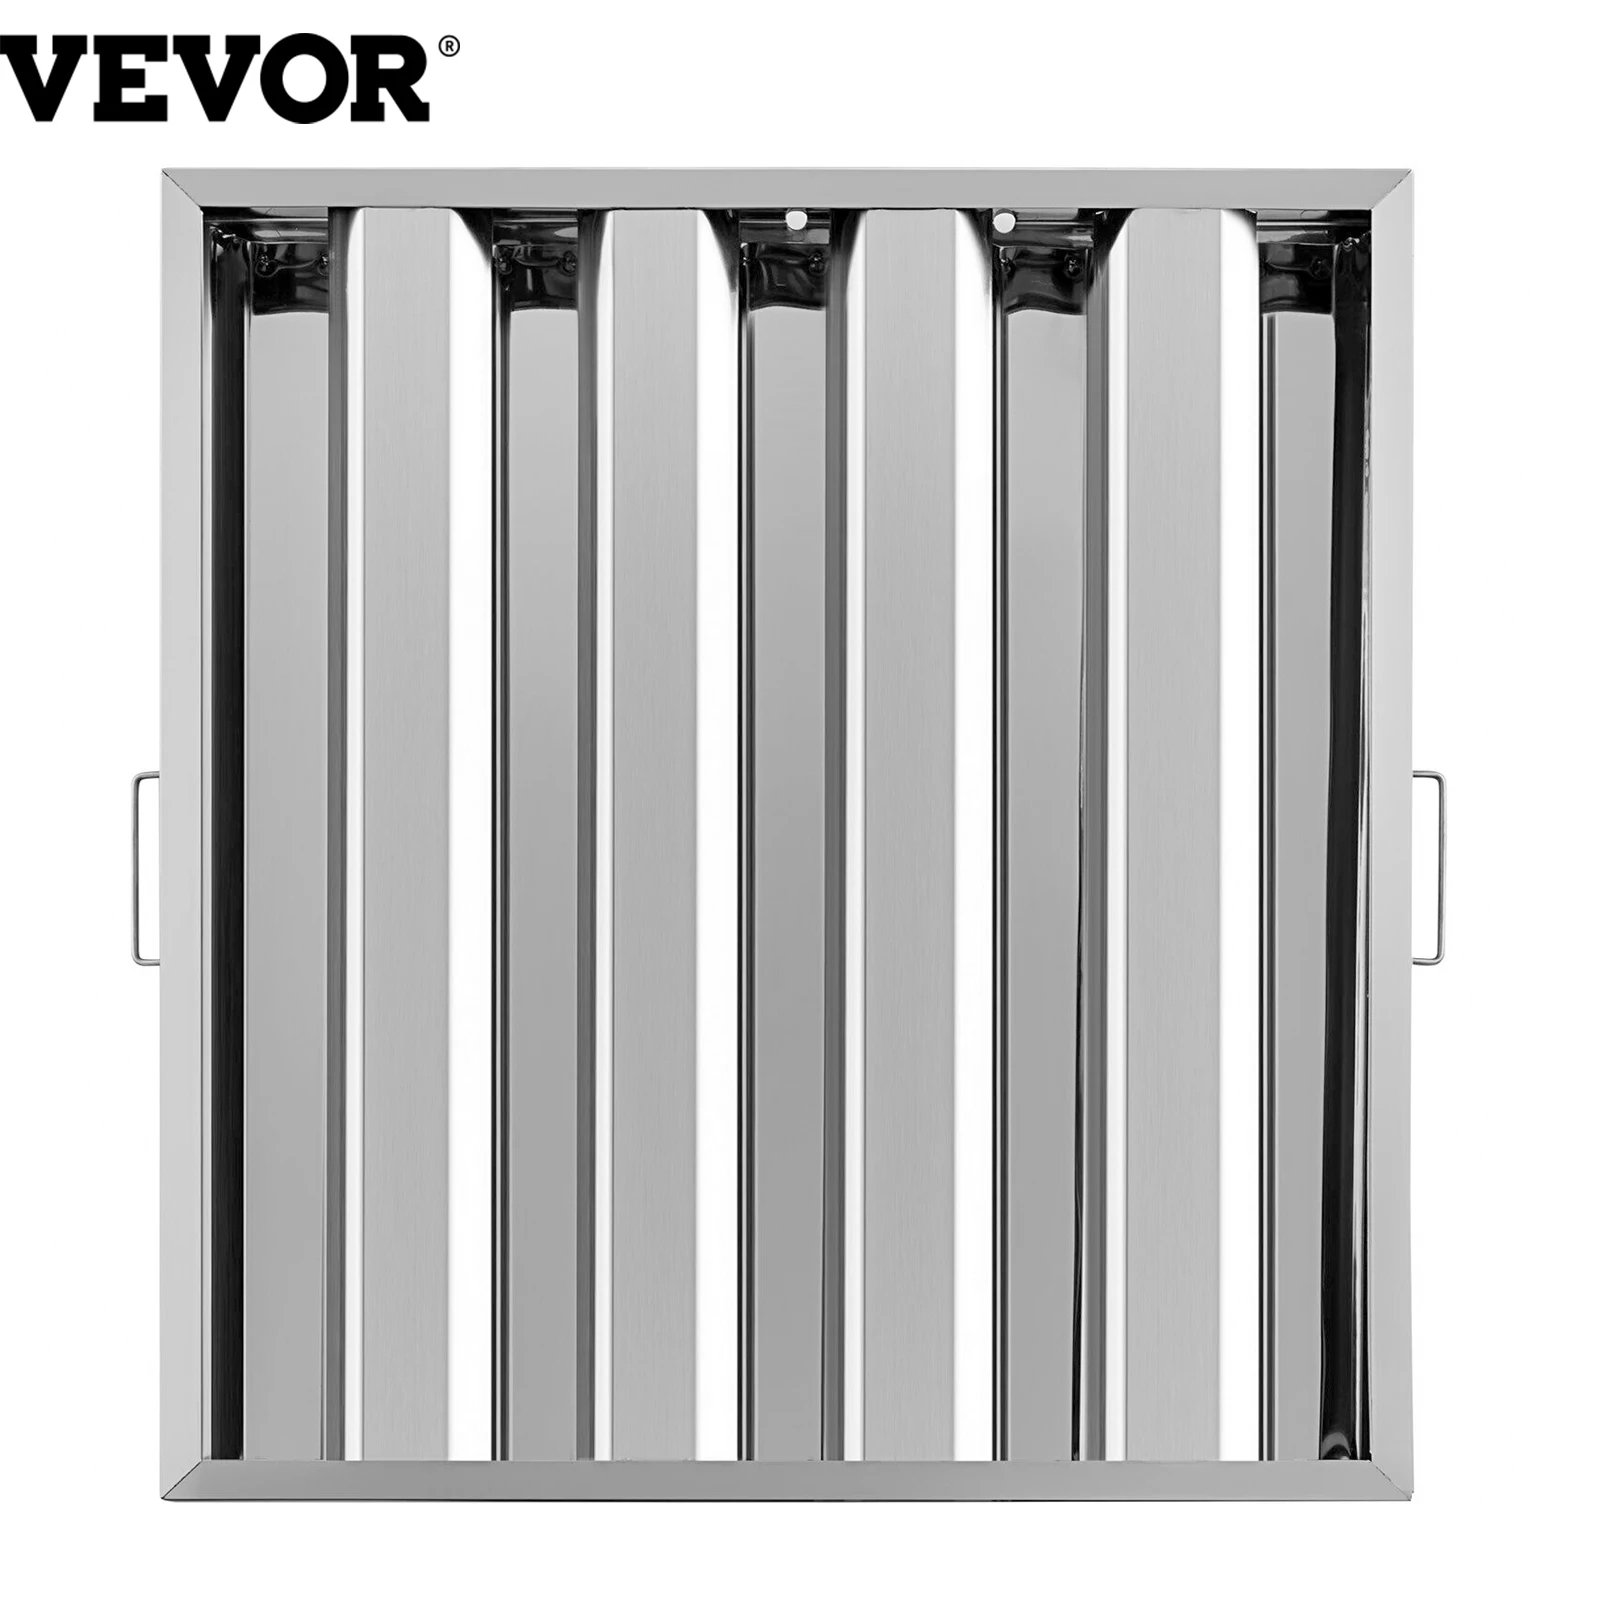 

VEVOR 4/5 Slot Commercial Hood Filter/Grease Baffle w/ Handle Stainless Steel Filter Stable Safe 6Pcs for Restaurant Industry